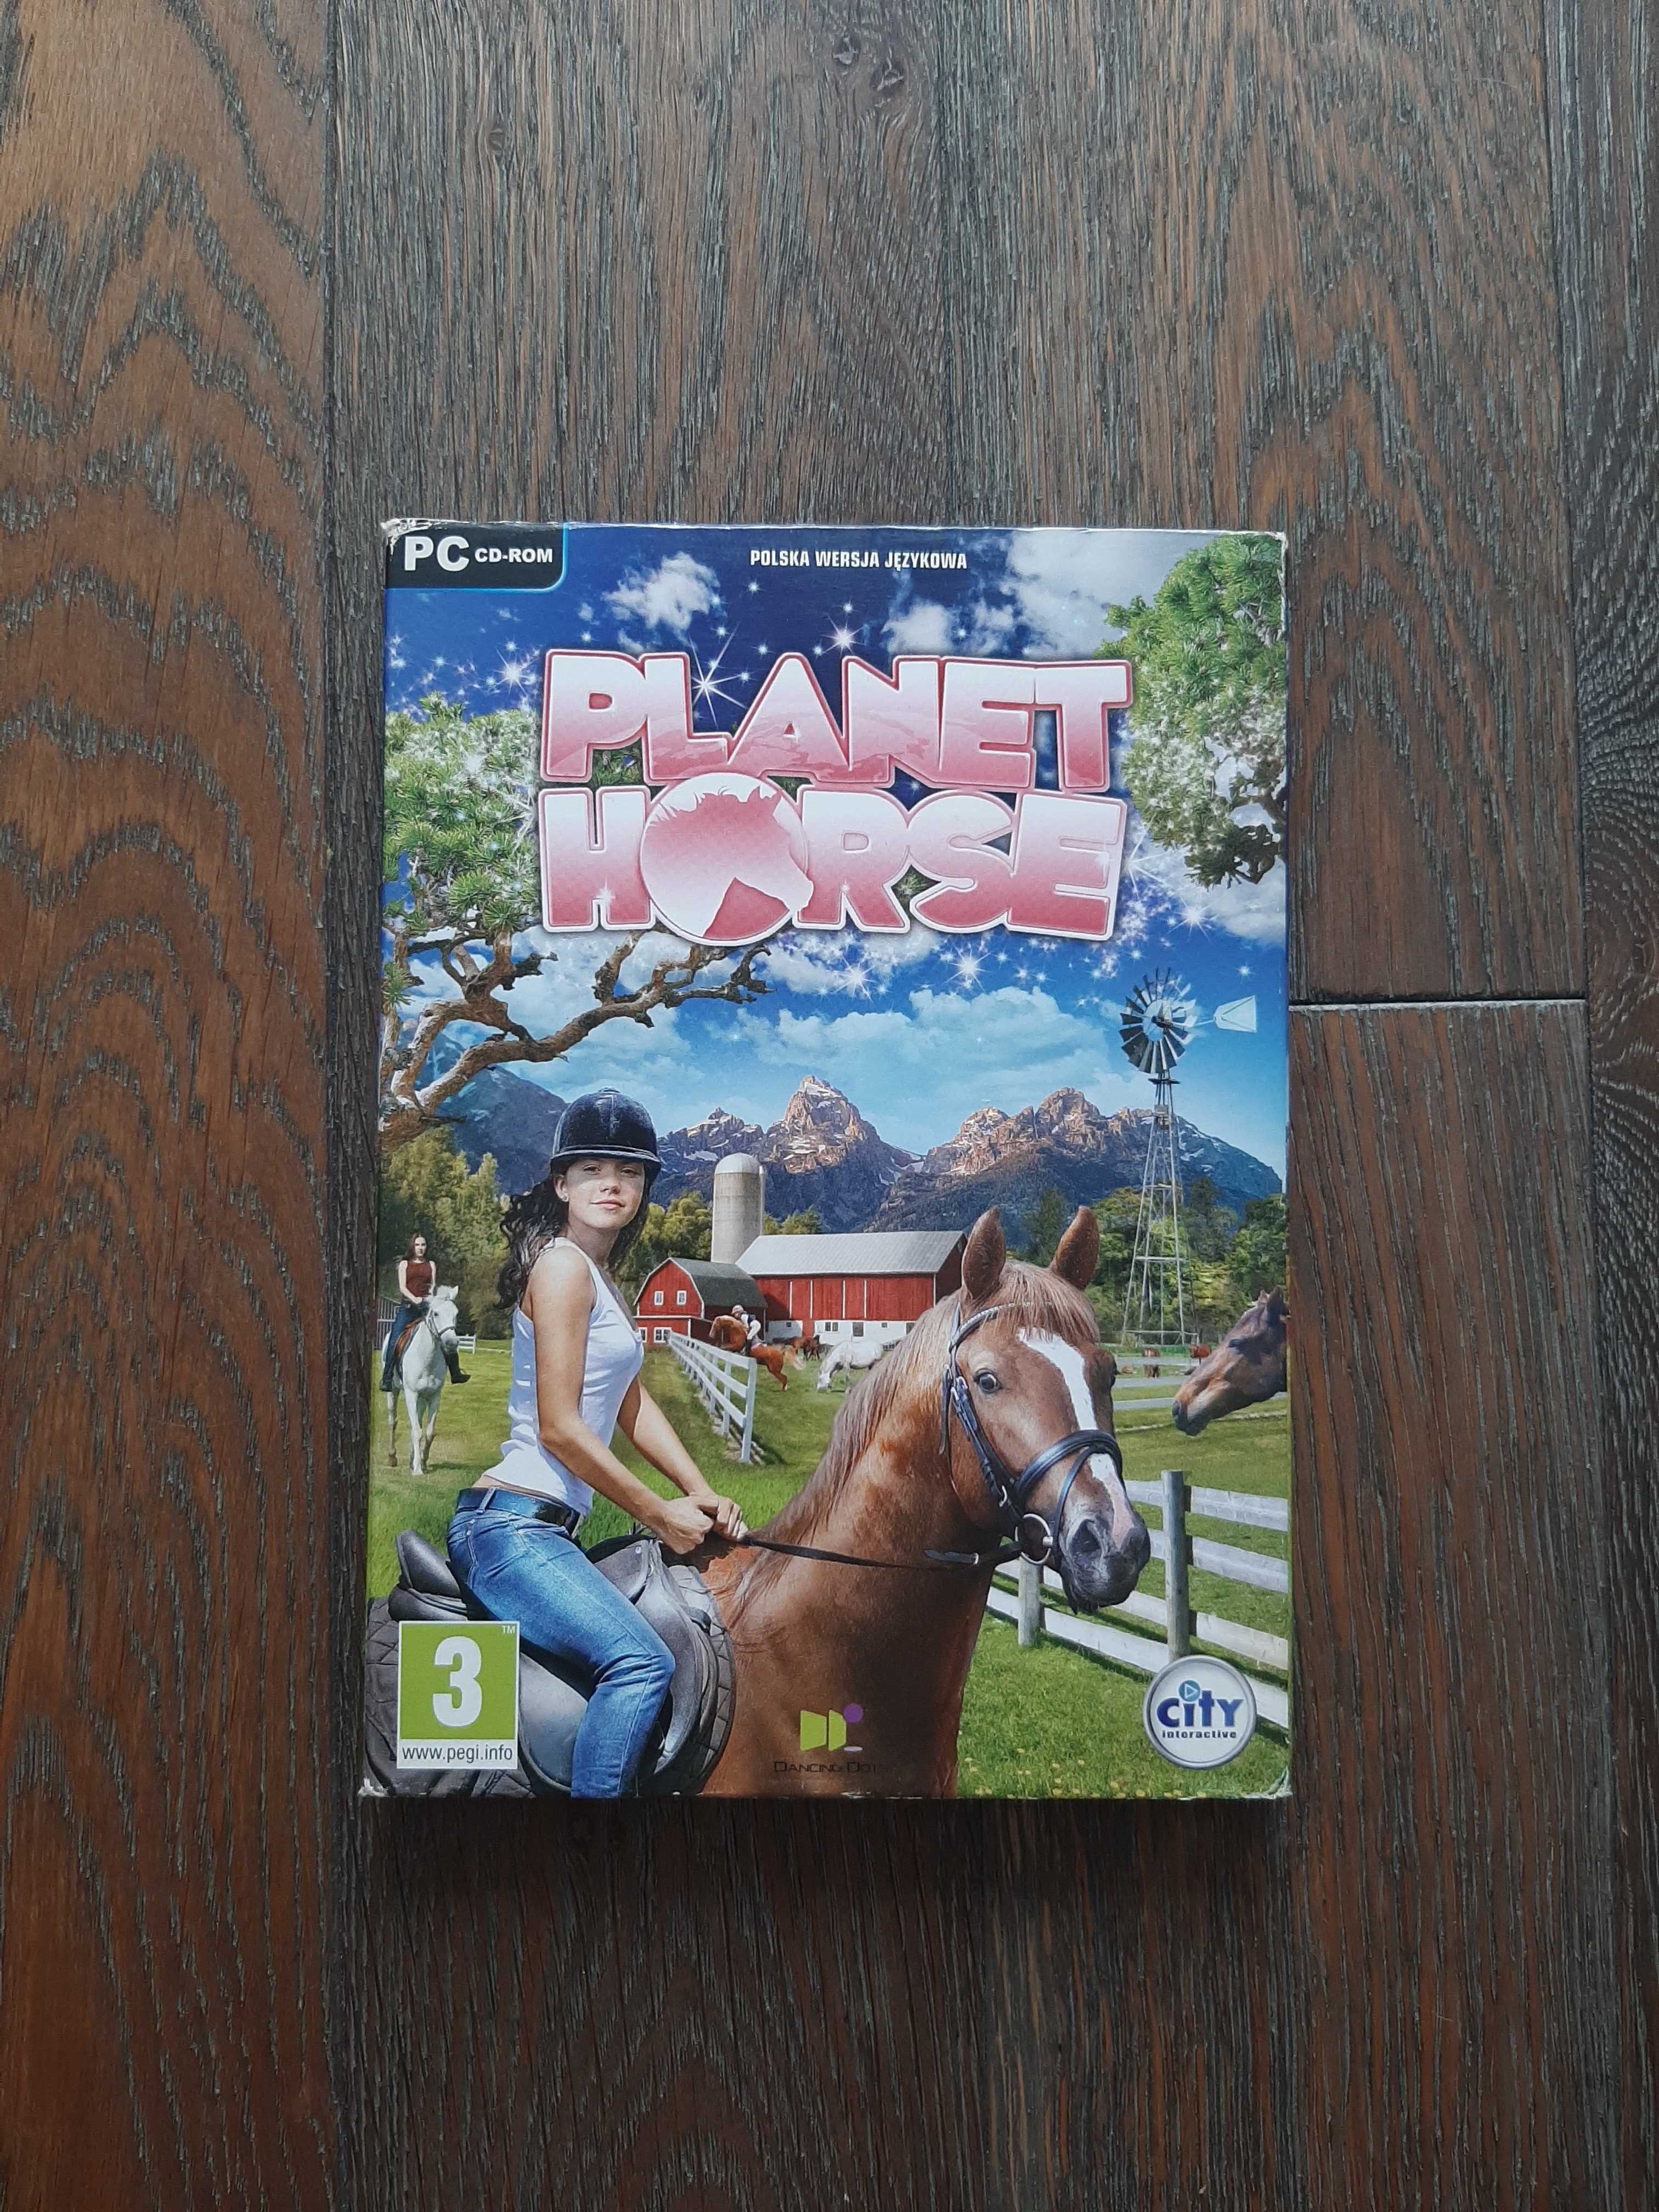 Planet Horse gra PC CD używana